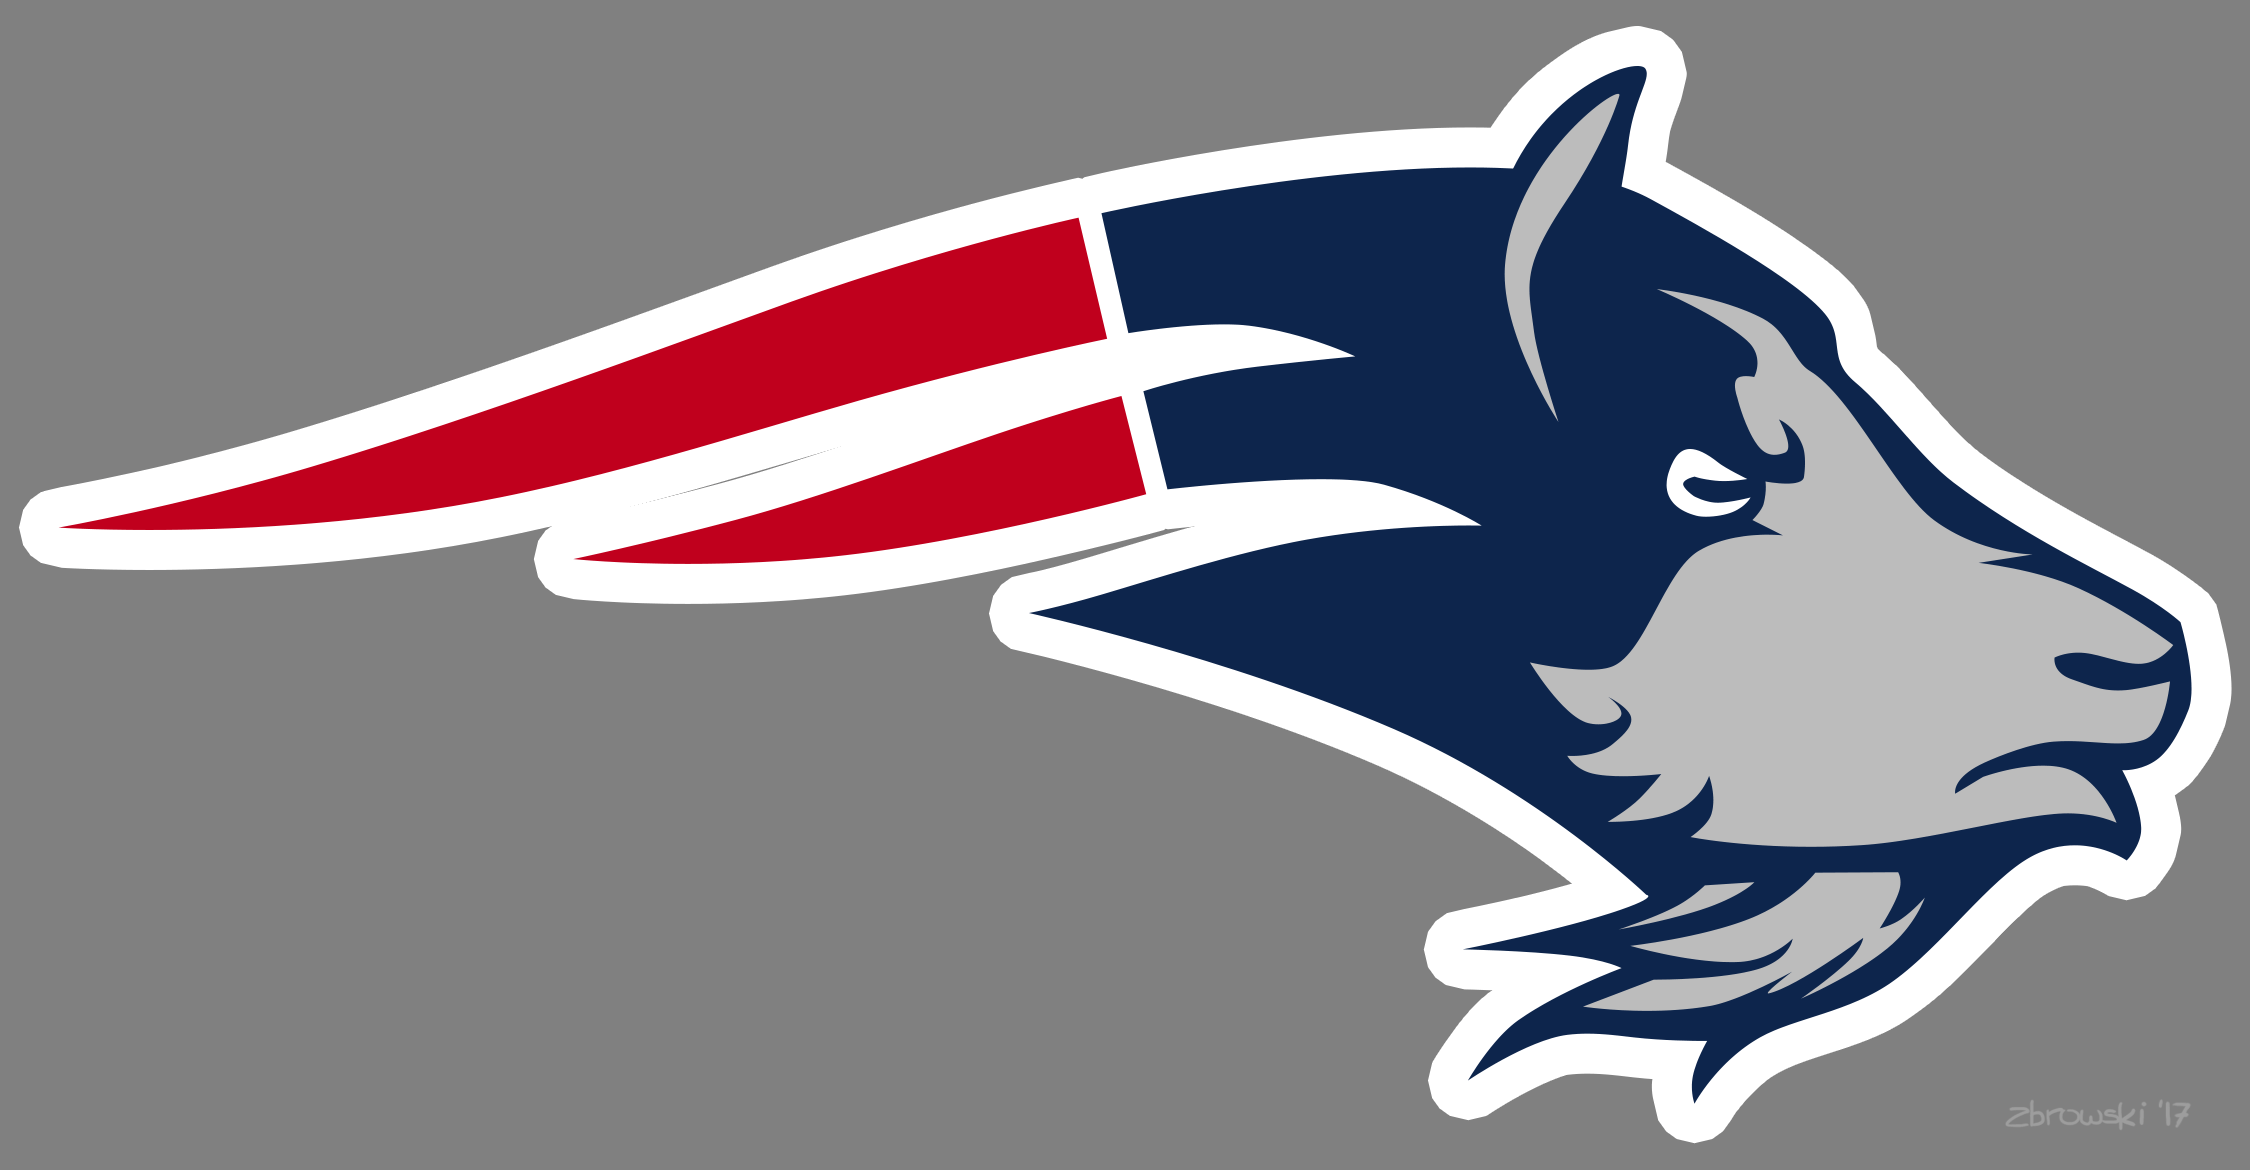 Patriots Logo - Pats unveil new logo for 2017 campaign!